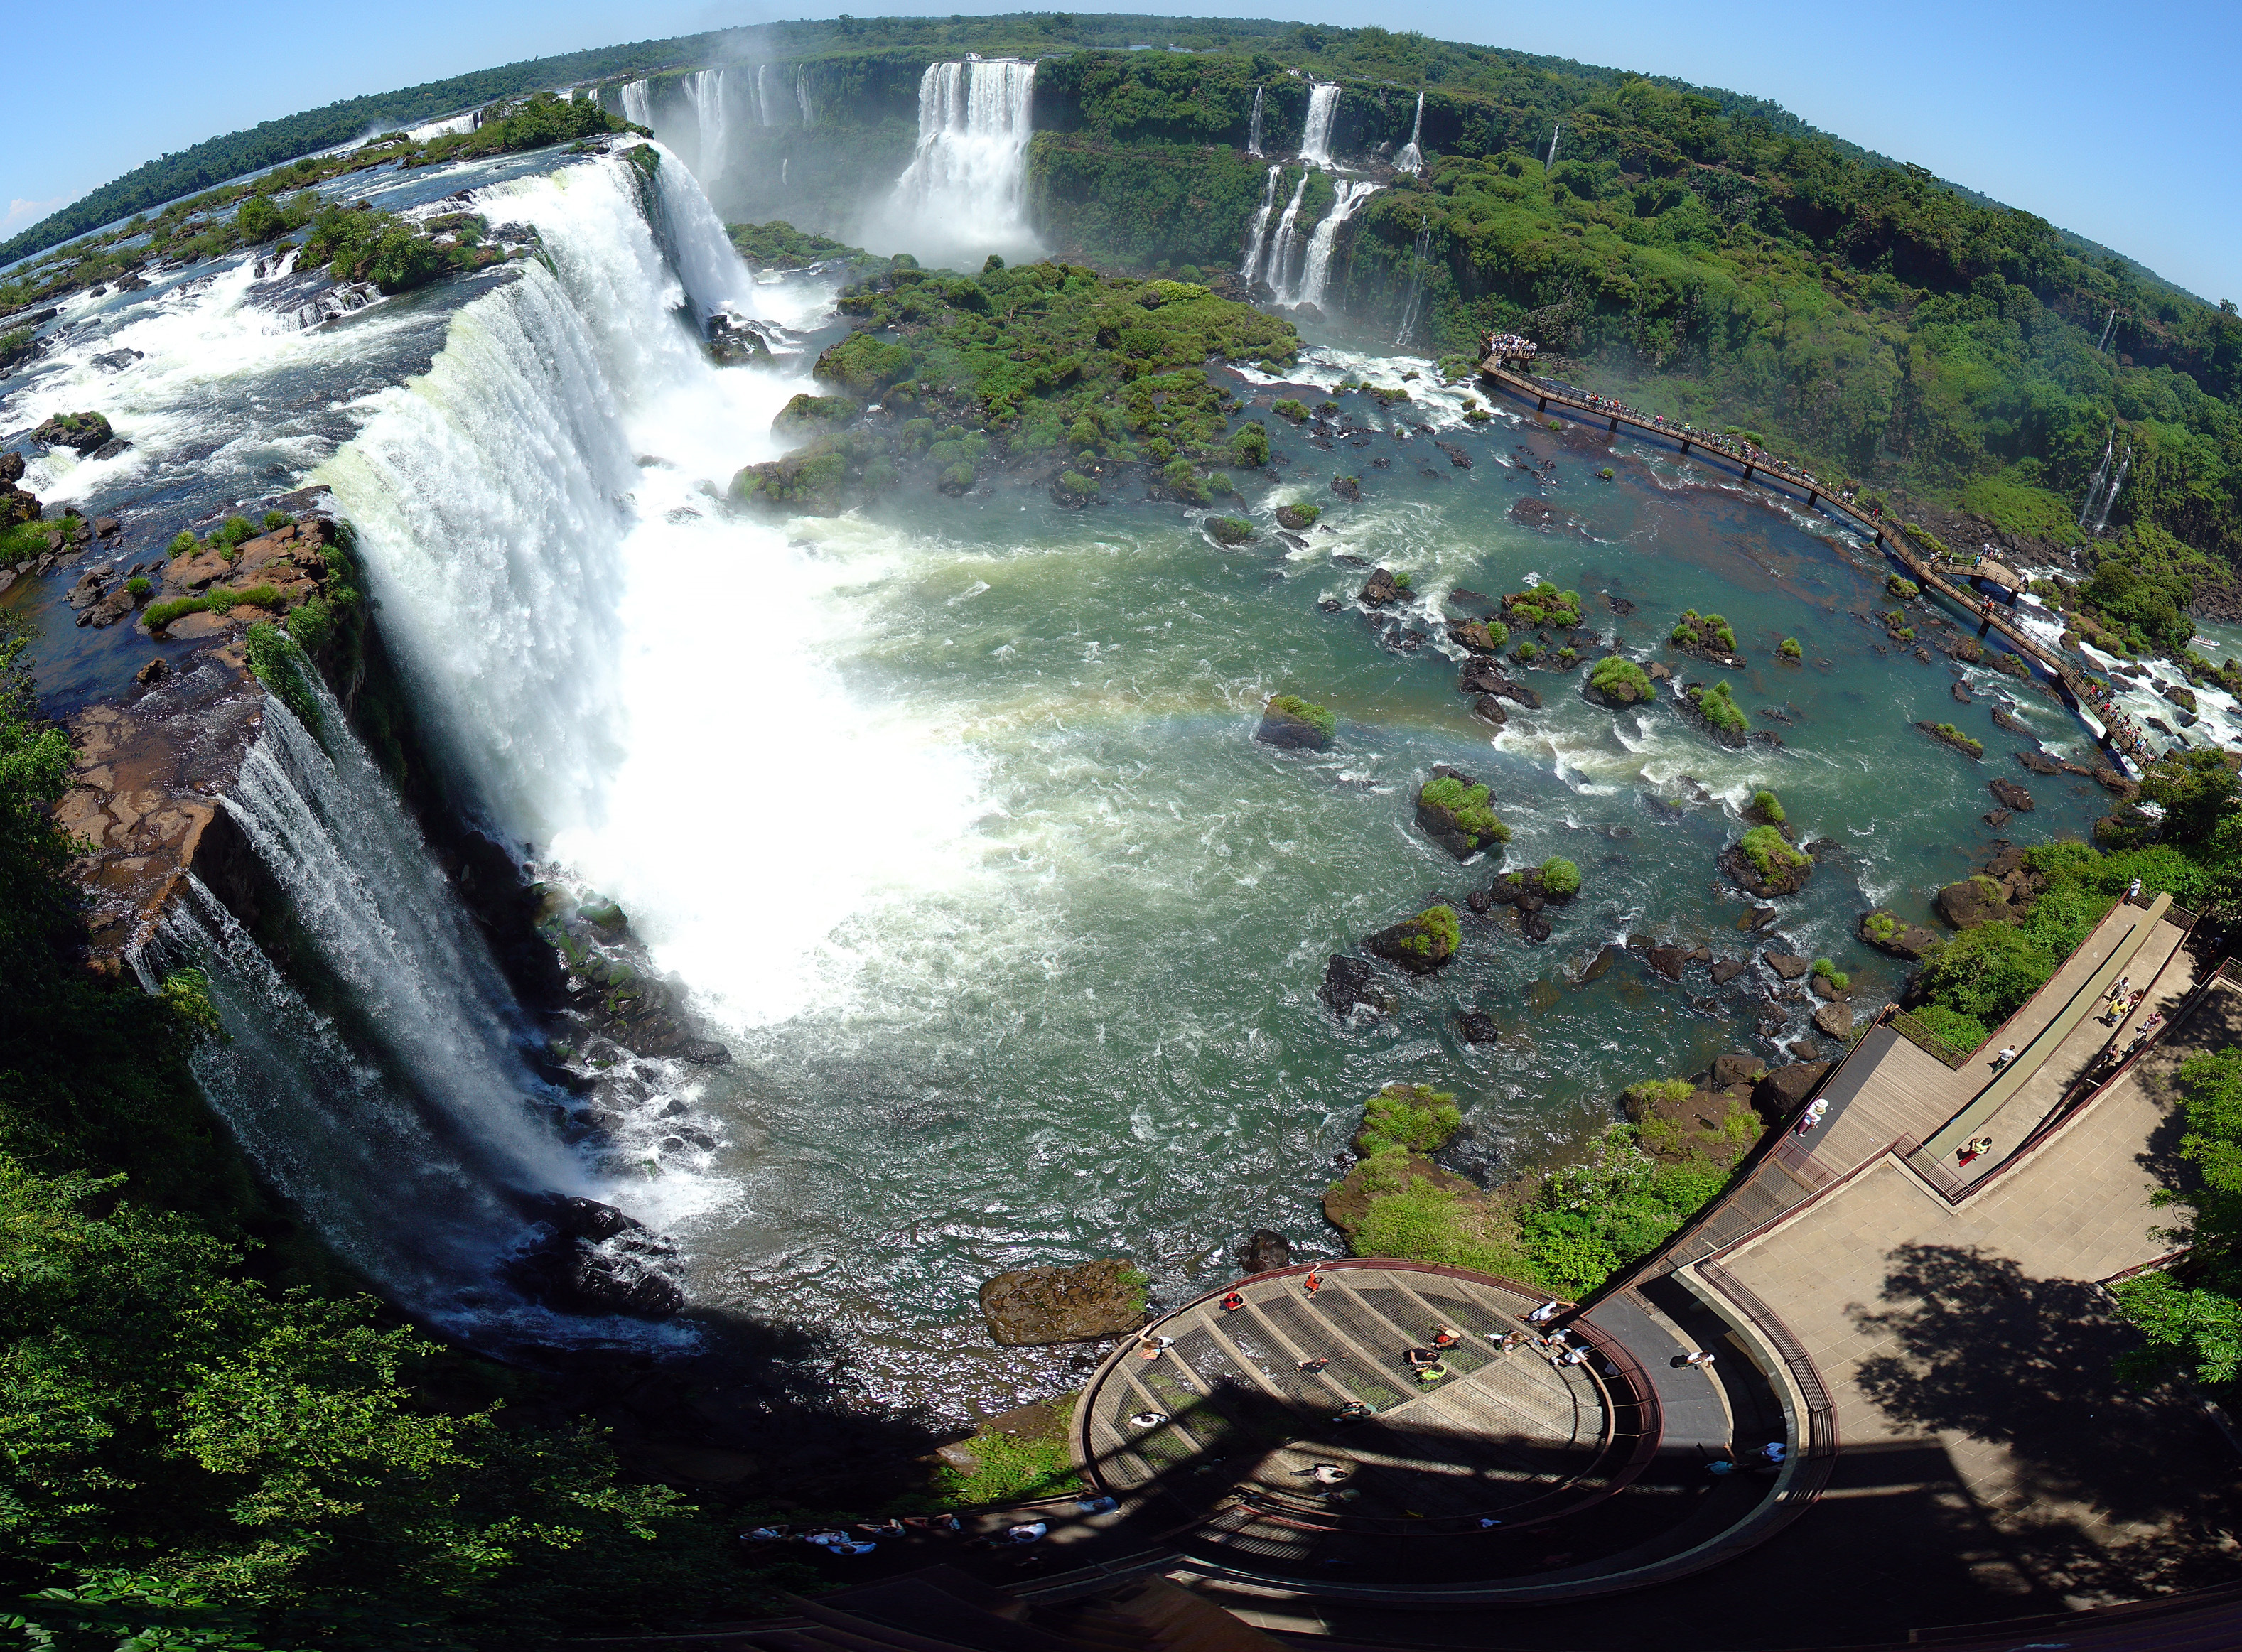 Iguazu Falls Brazil One Of The Seven Wonders Of The World Found The World 